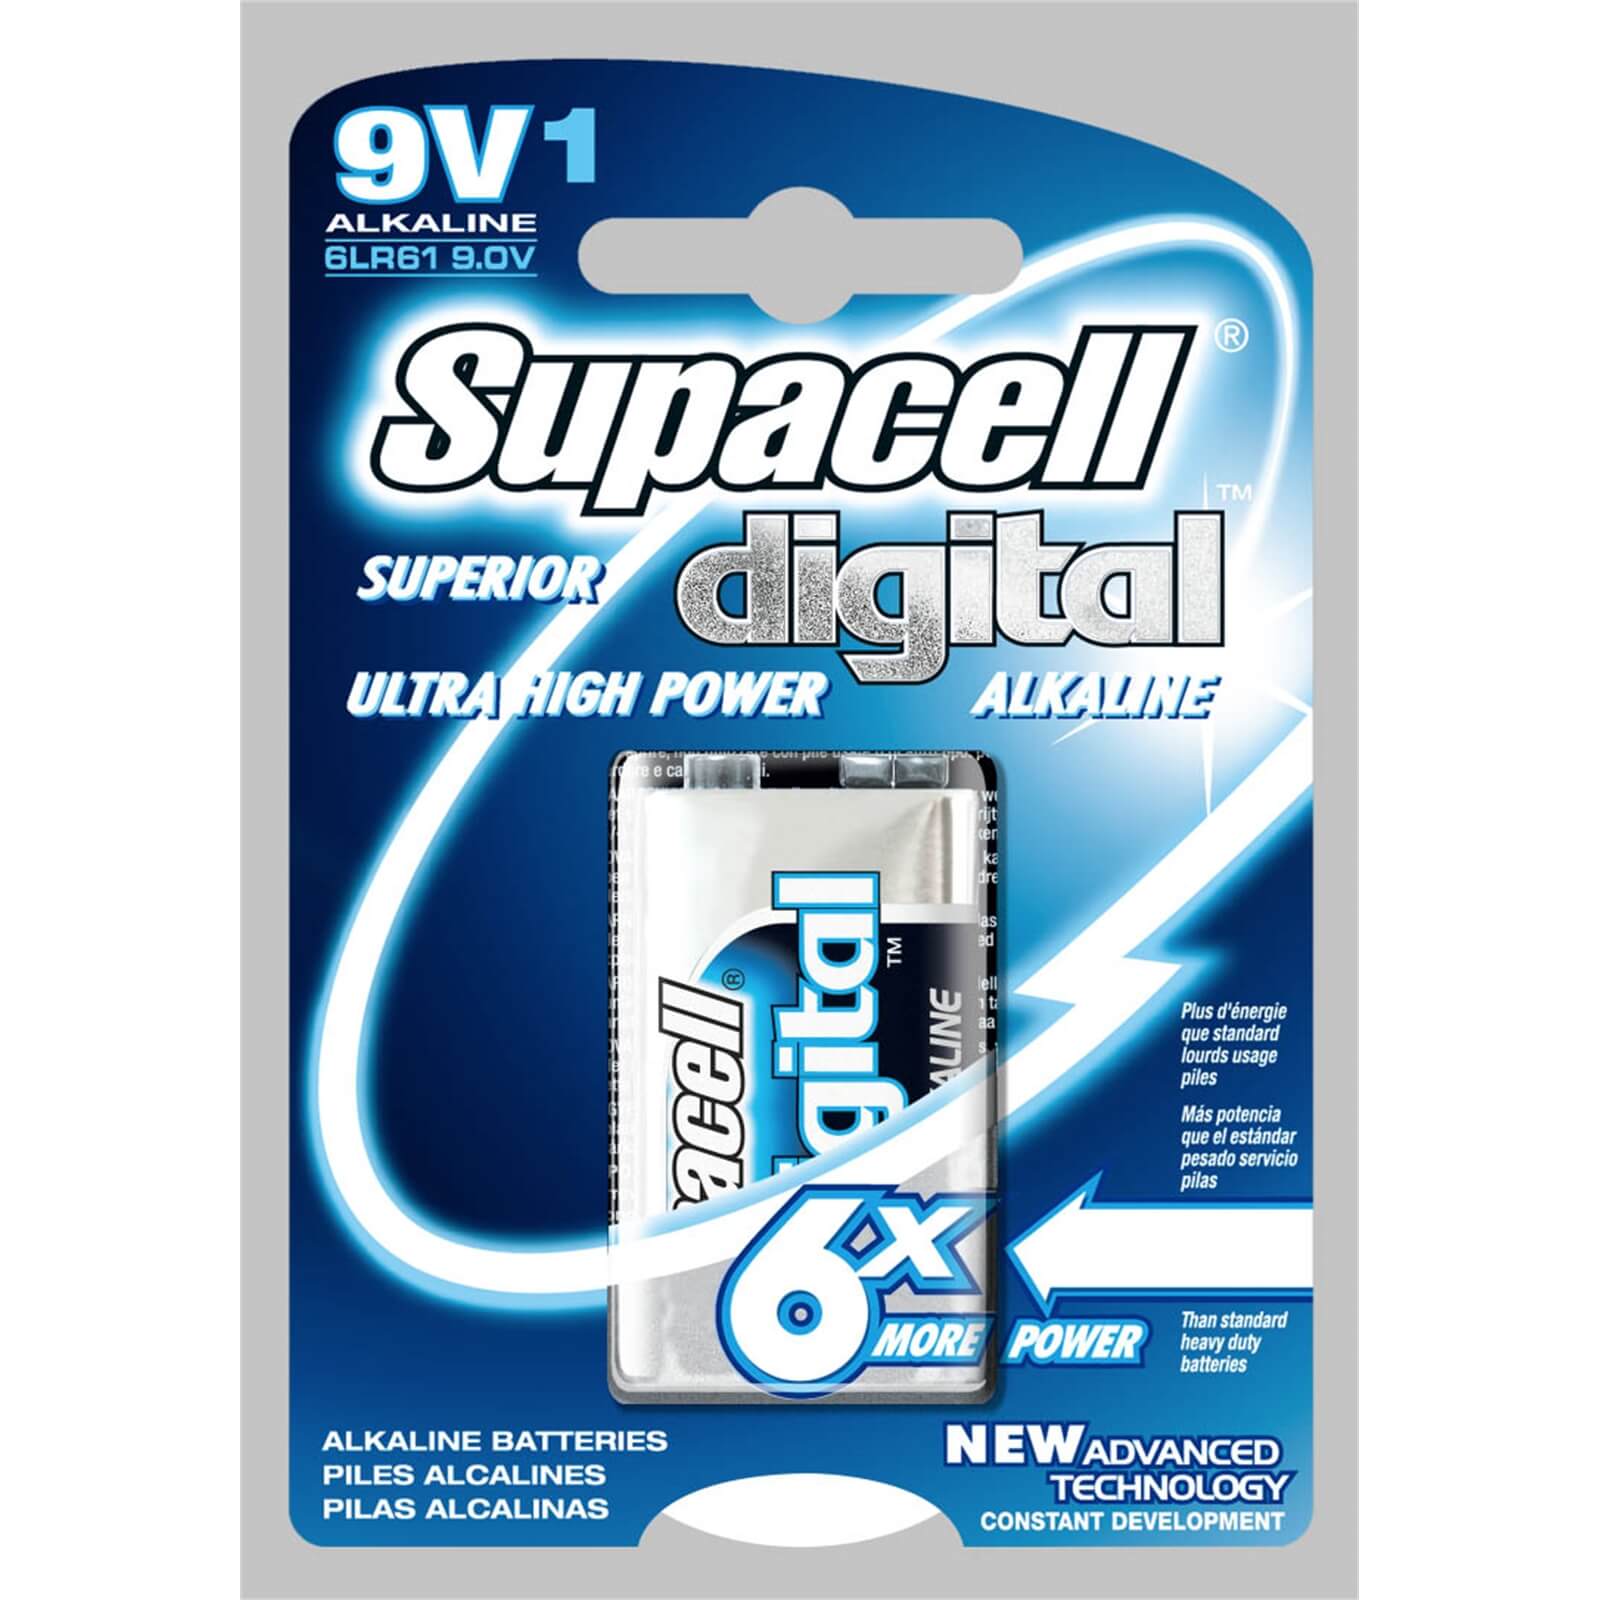 Supacell Digital 9V 1 Unit